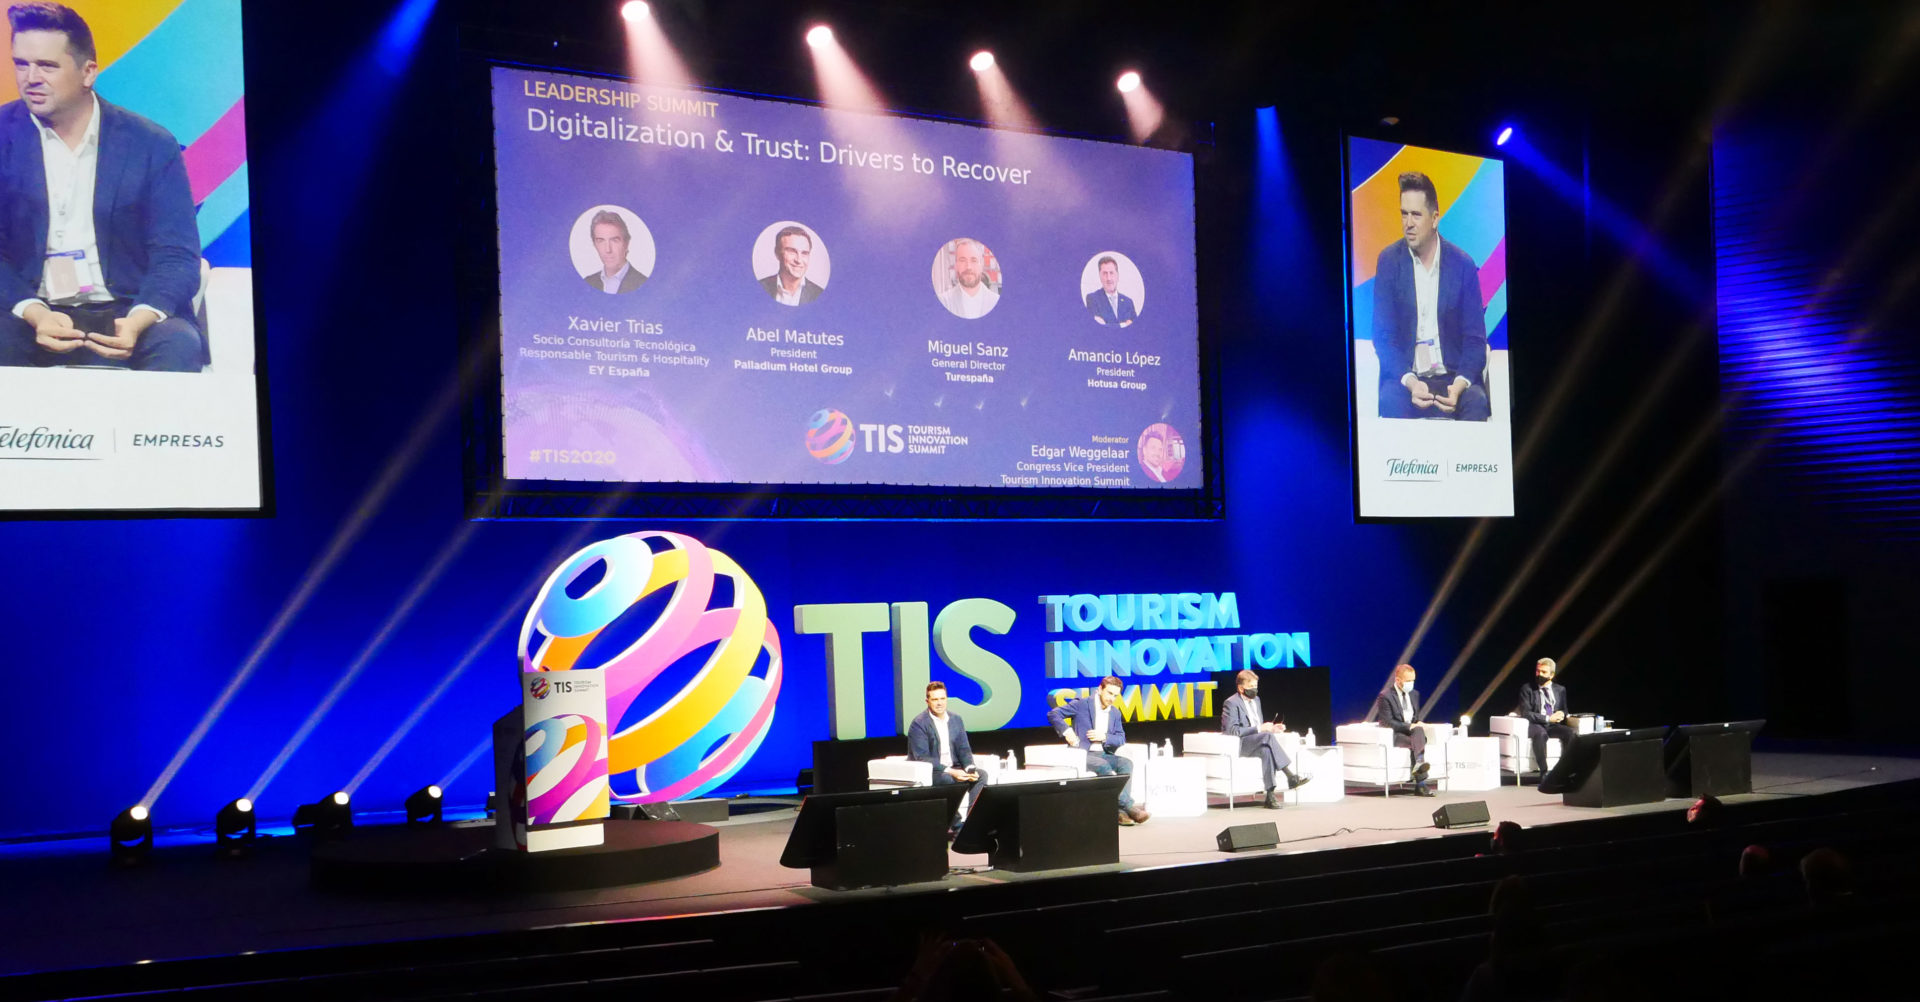 Tourism Innovation Summit (TIS) 